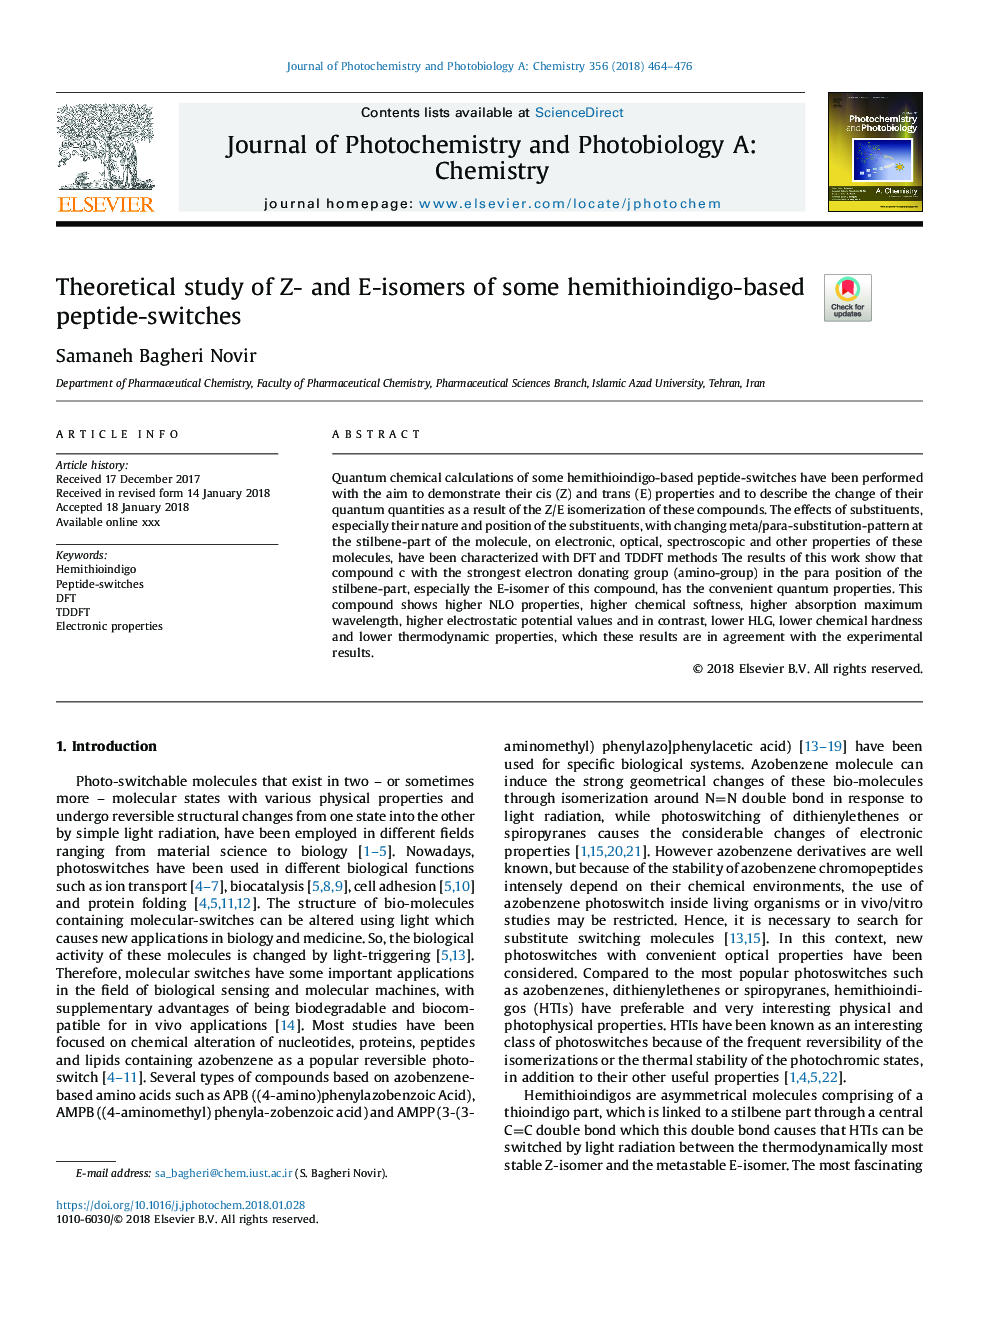 Theoretical study of Z- and E-isomers of some hemithioindigo-based peptide-switches